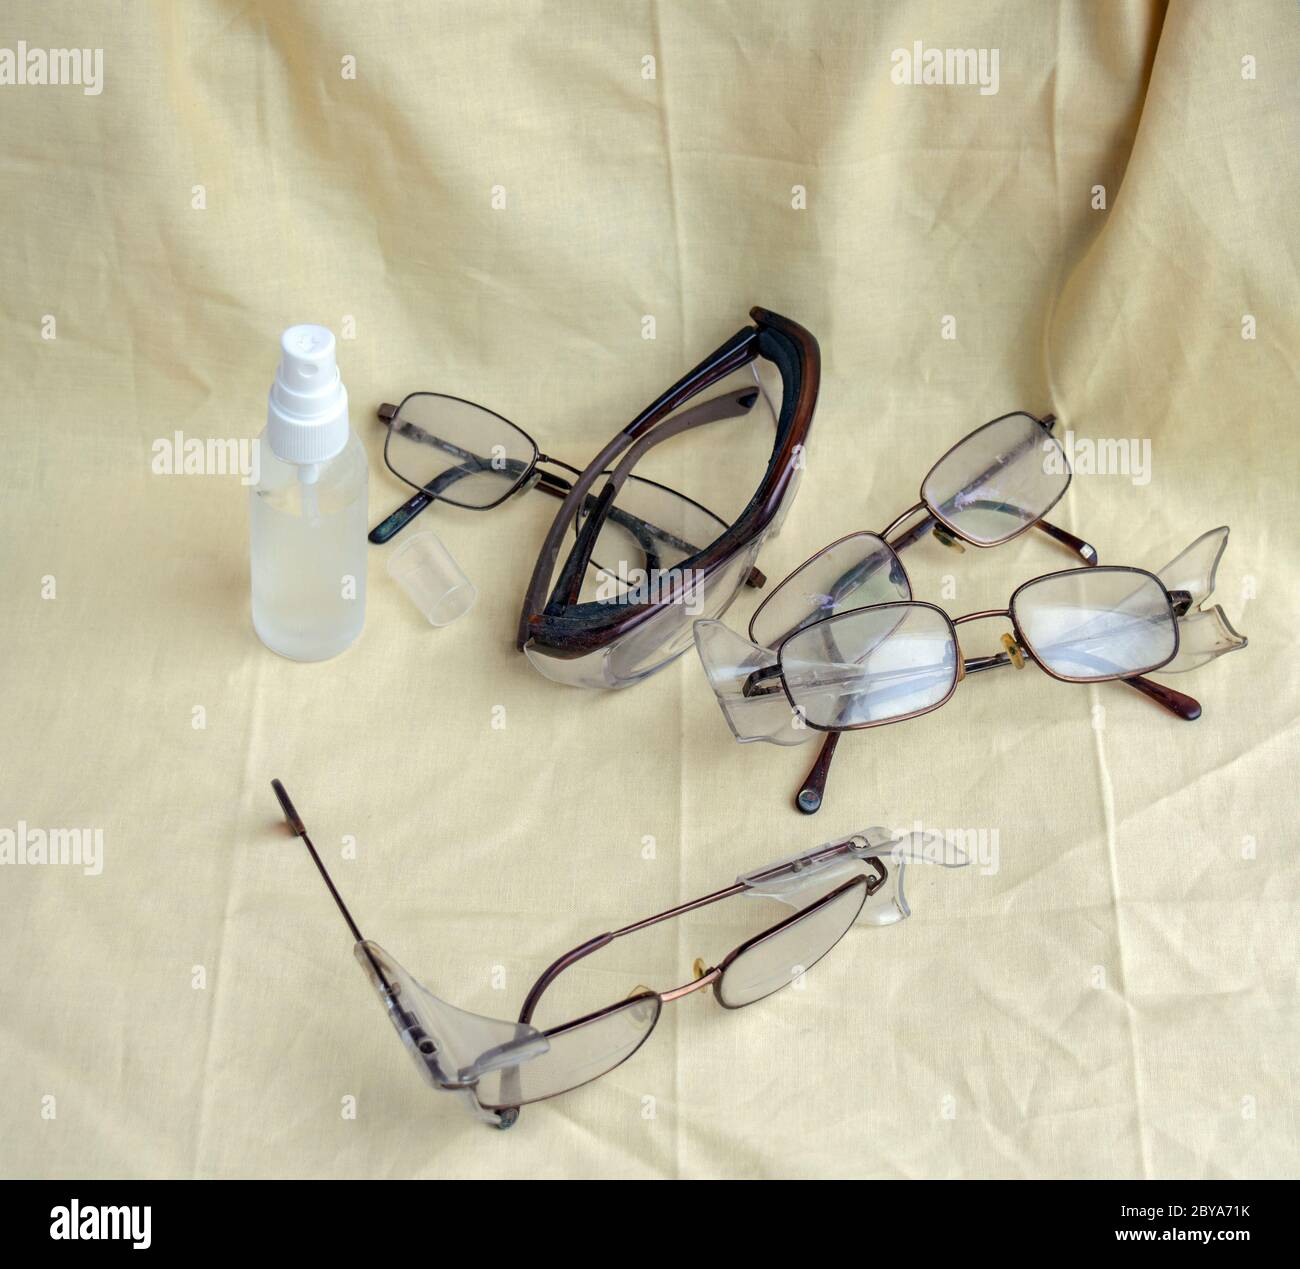 Glasses cleaner -Fotos und -Bildmaterial in hoher Auflösung – Alamy